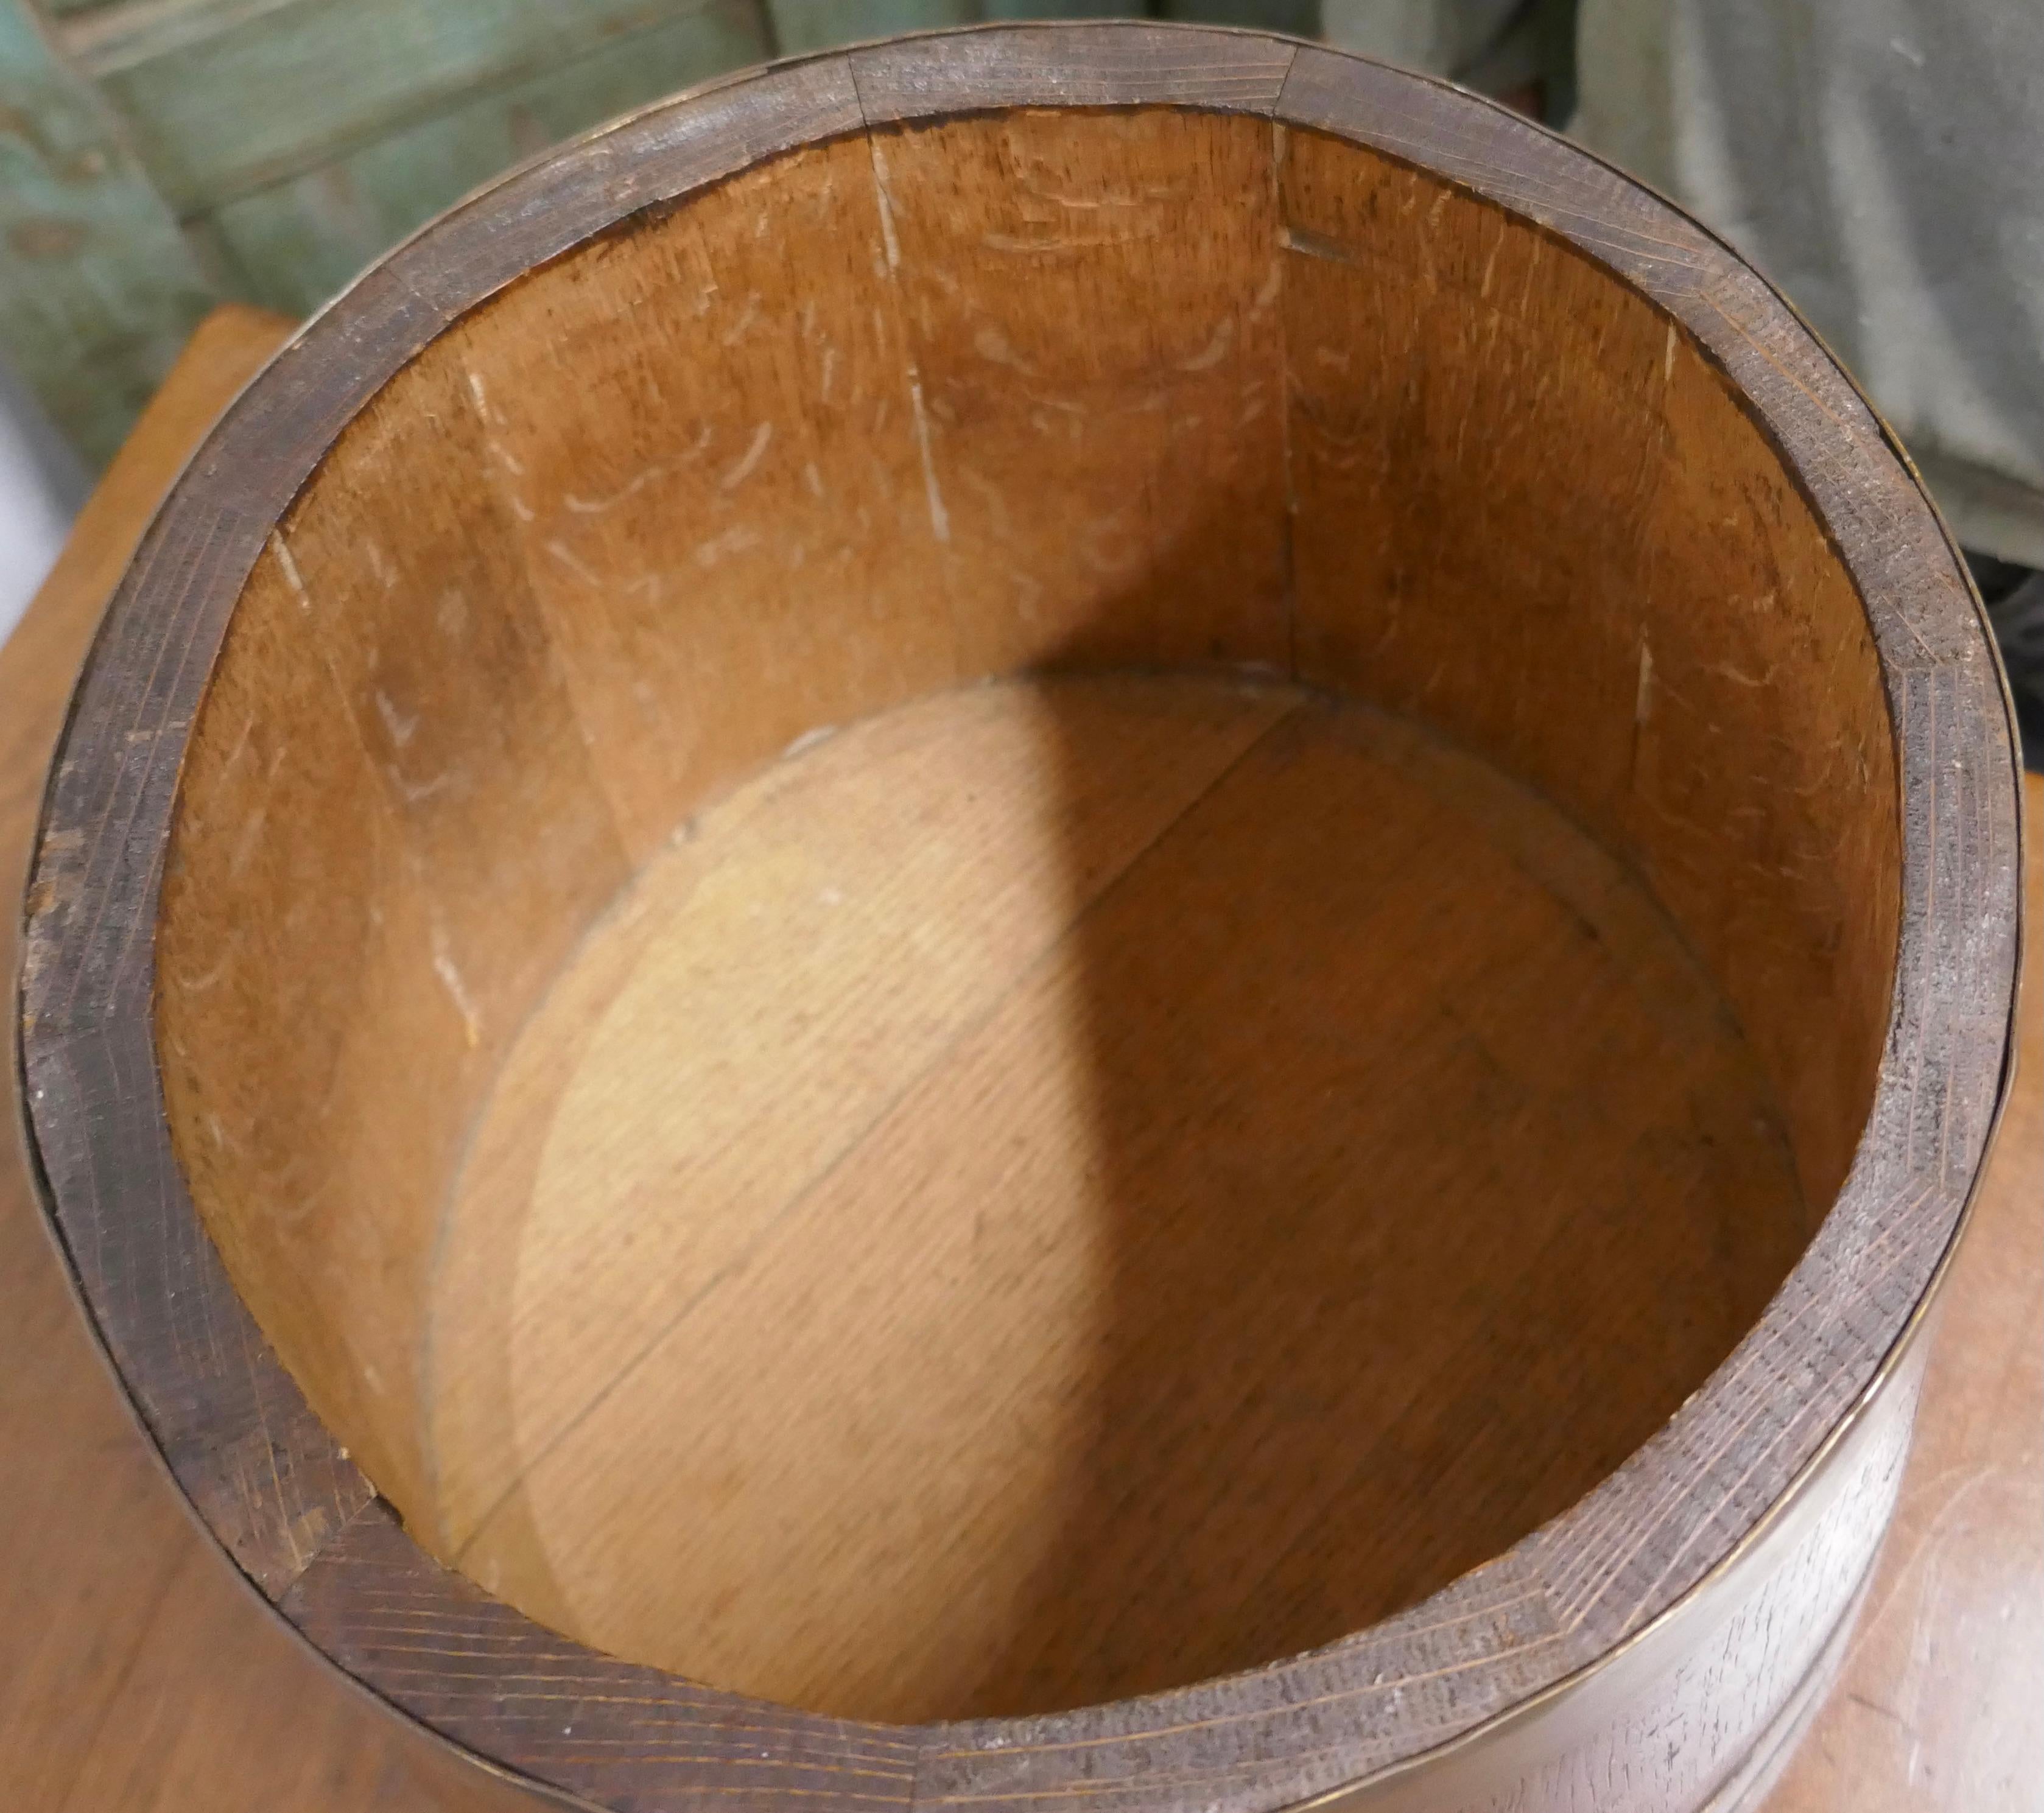 20th Century Royal Navy “Grog Tub”, Oak and Brass Sailor’s Rum Barrel